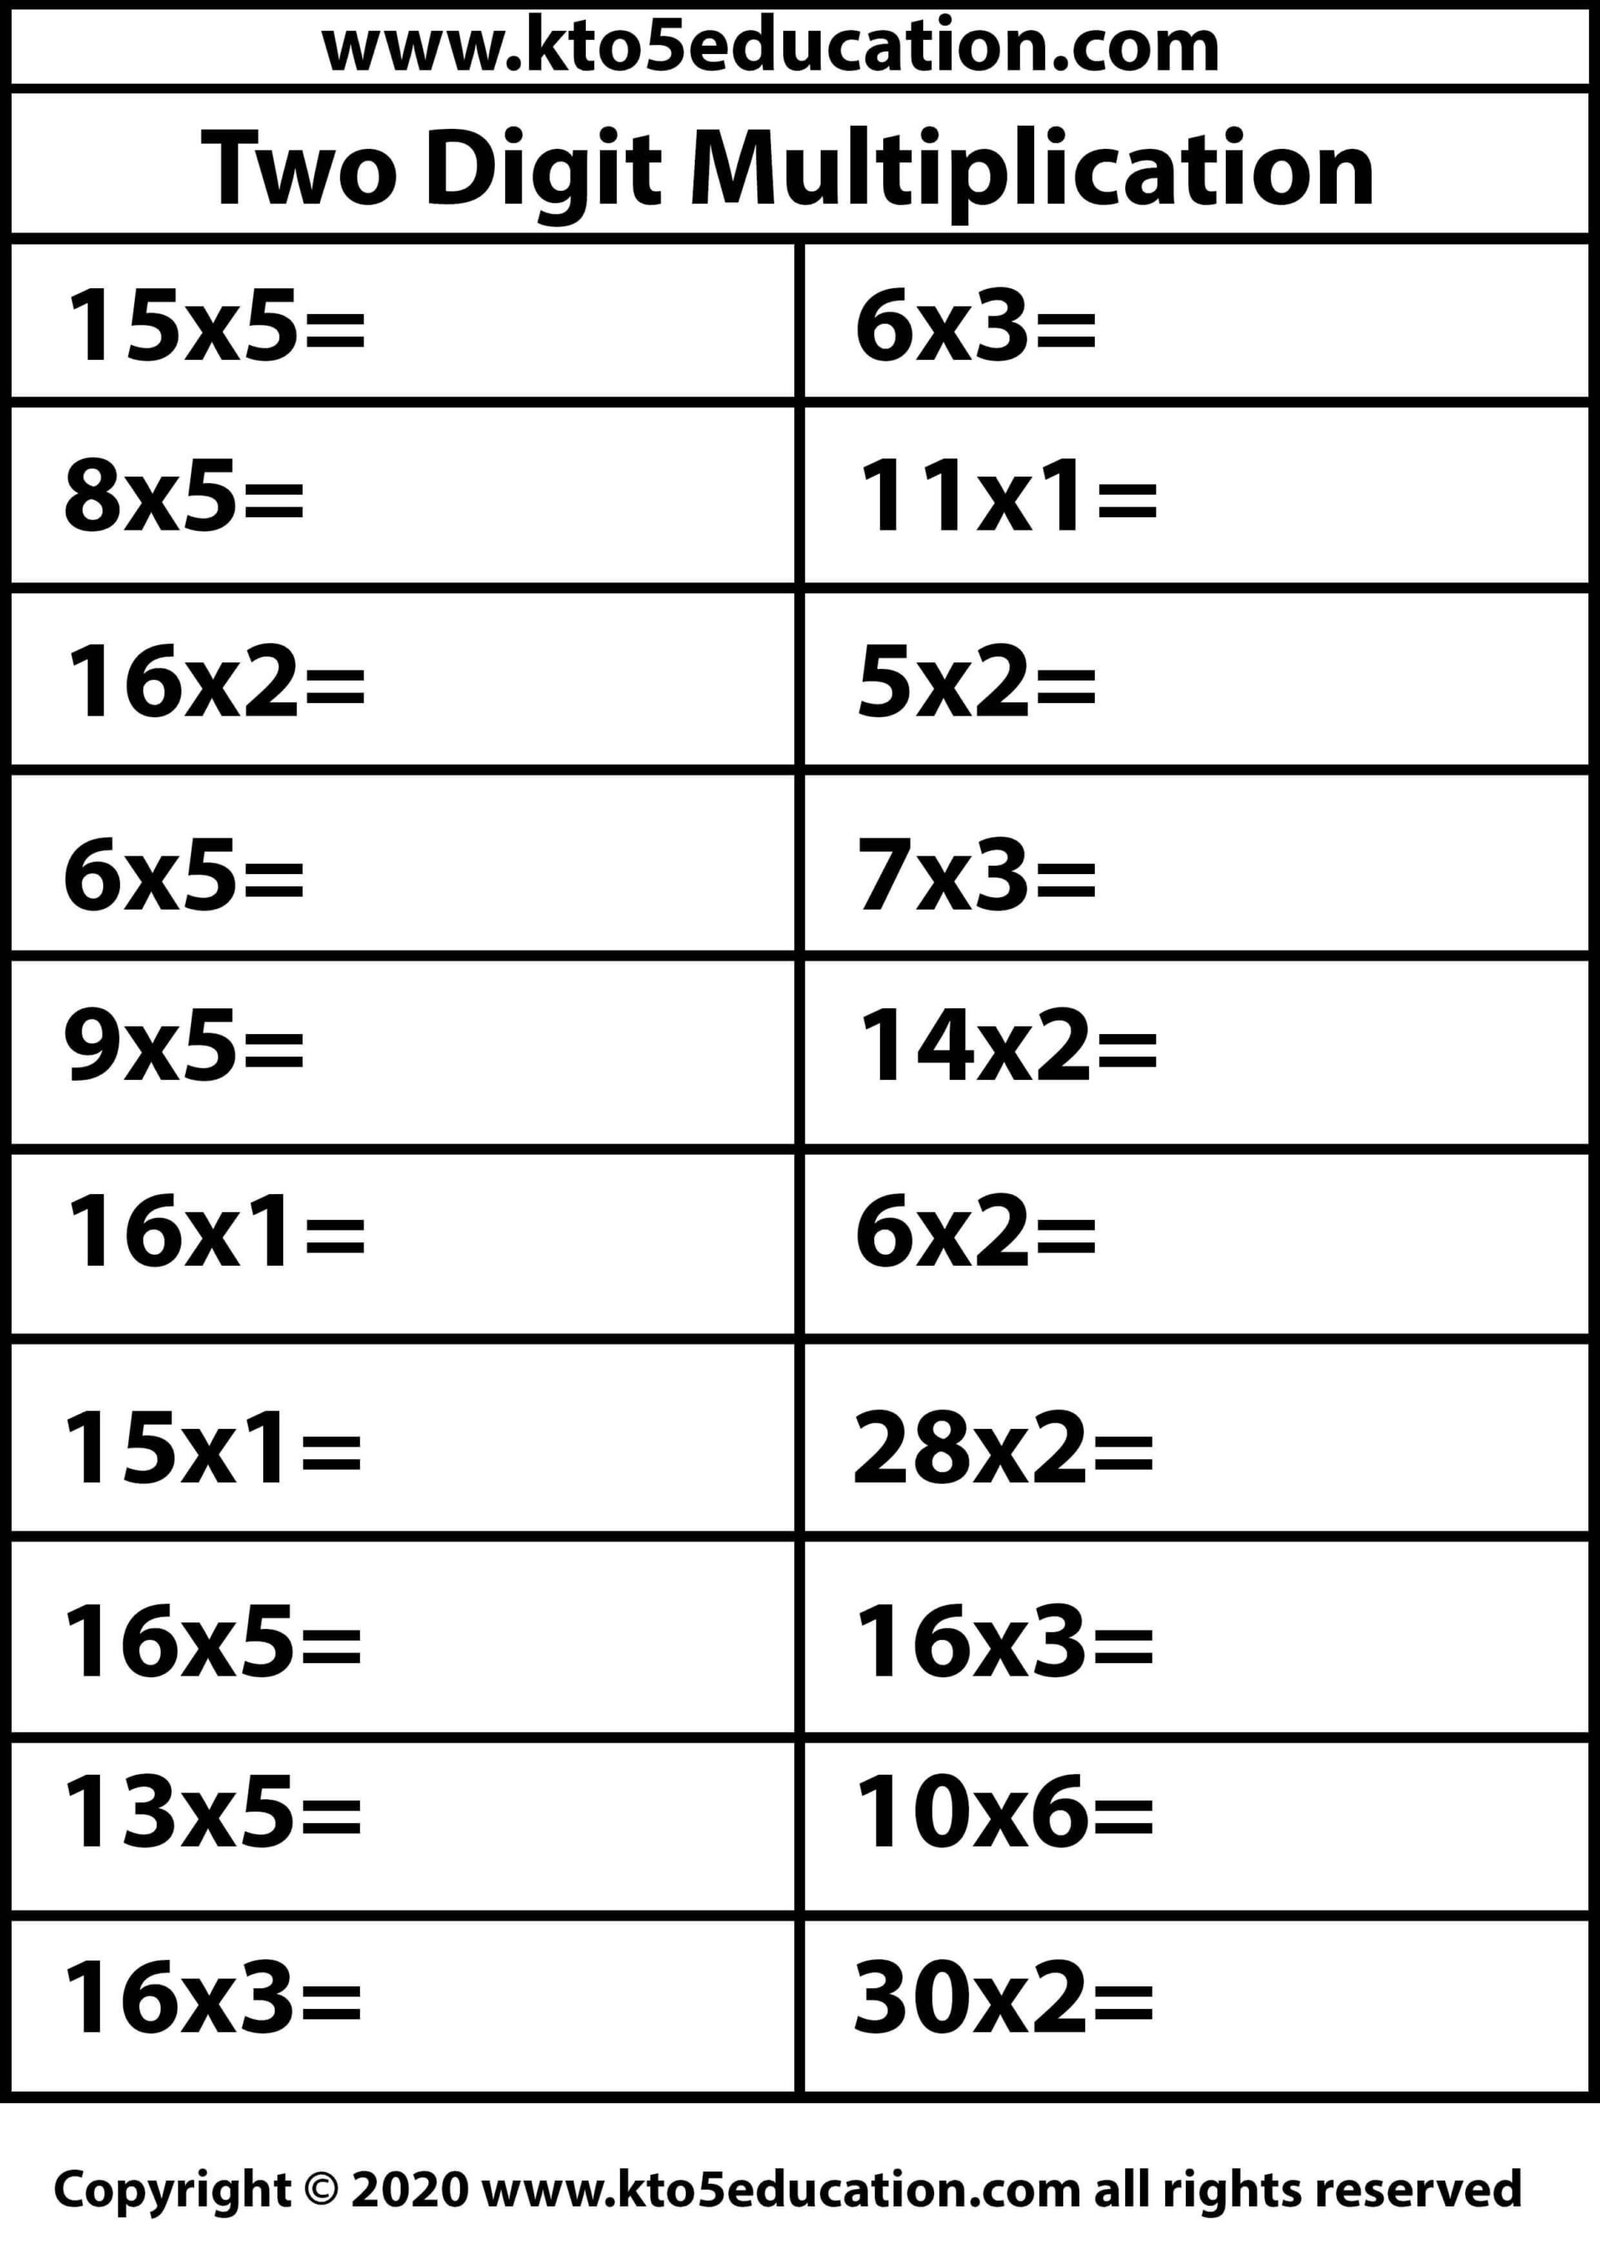 two-digit-multiplication-worksheet-2-kto5education